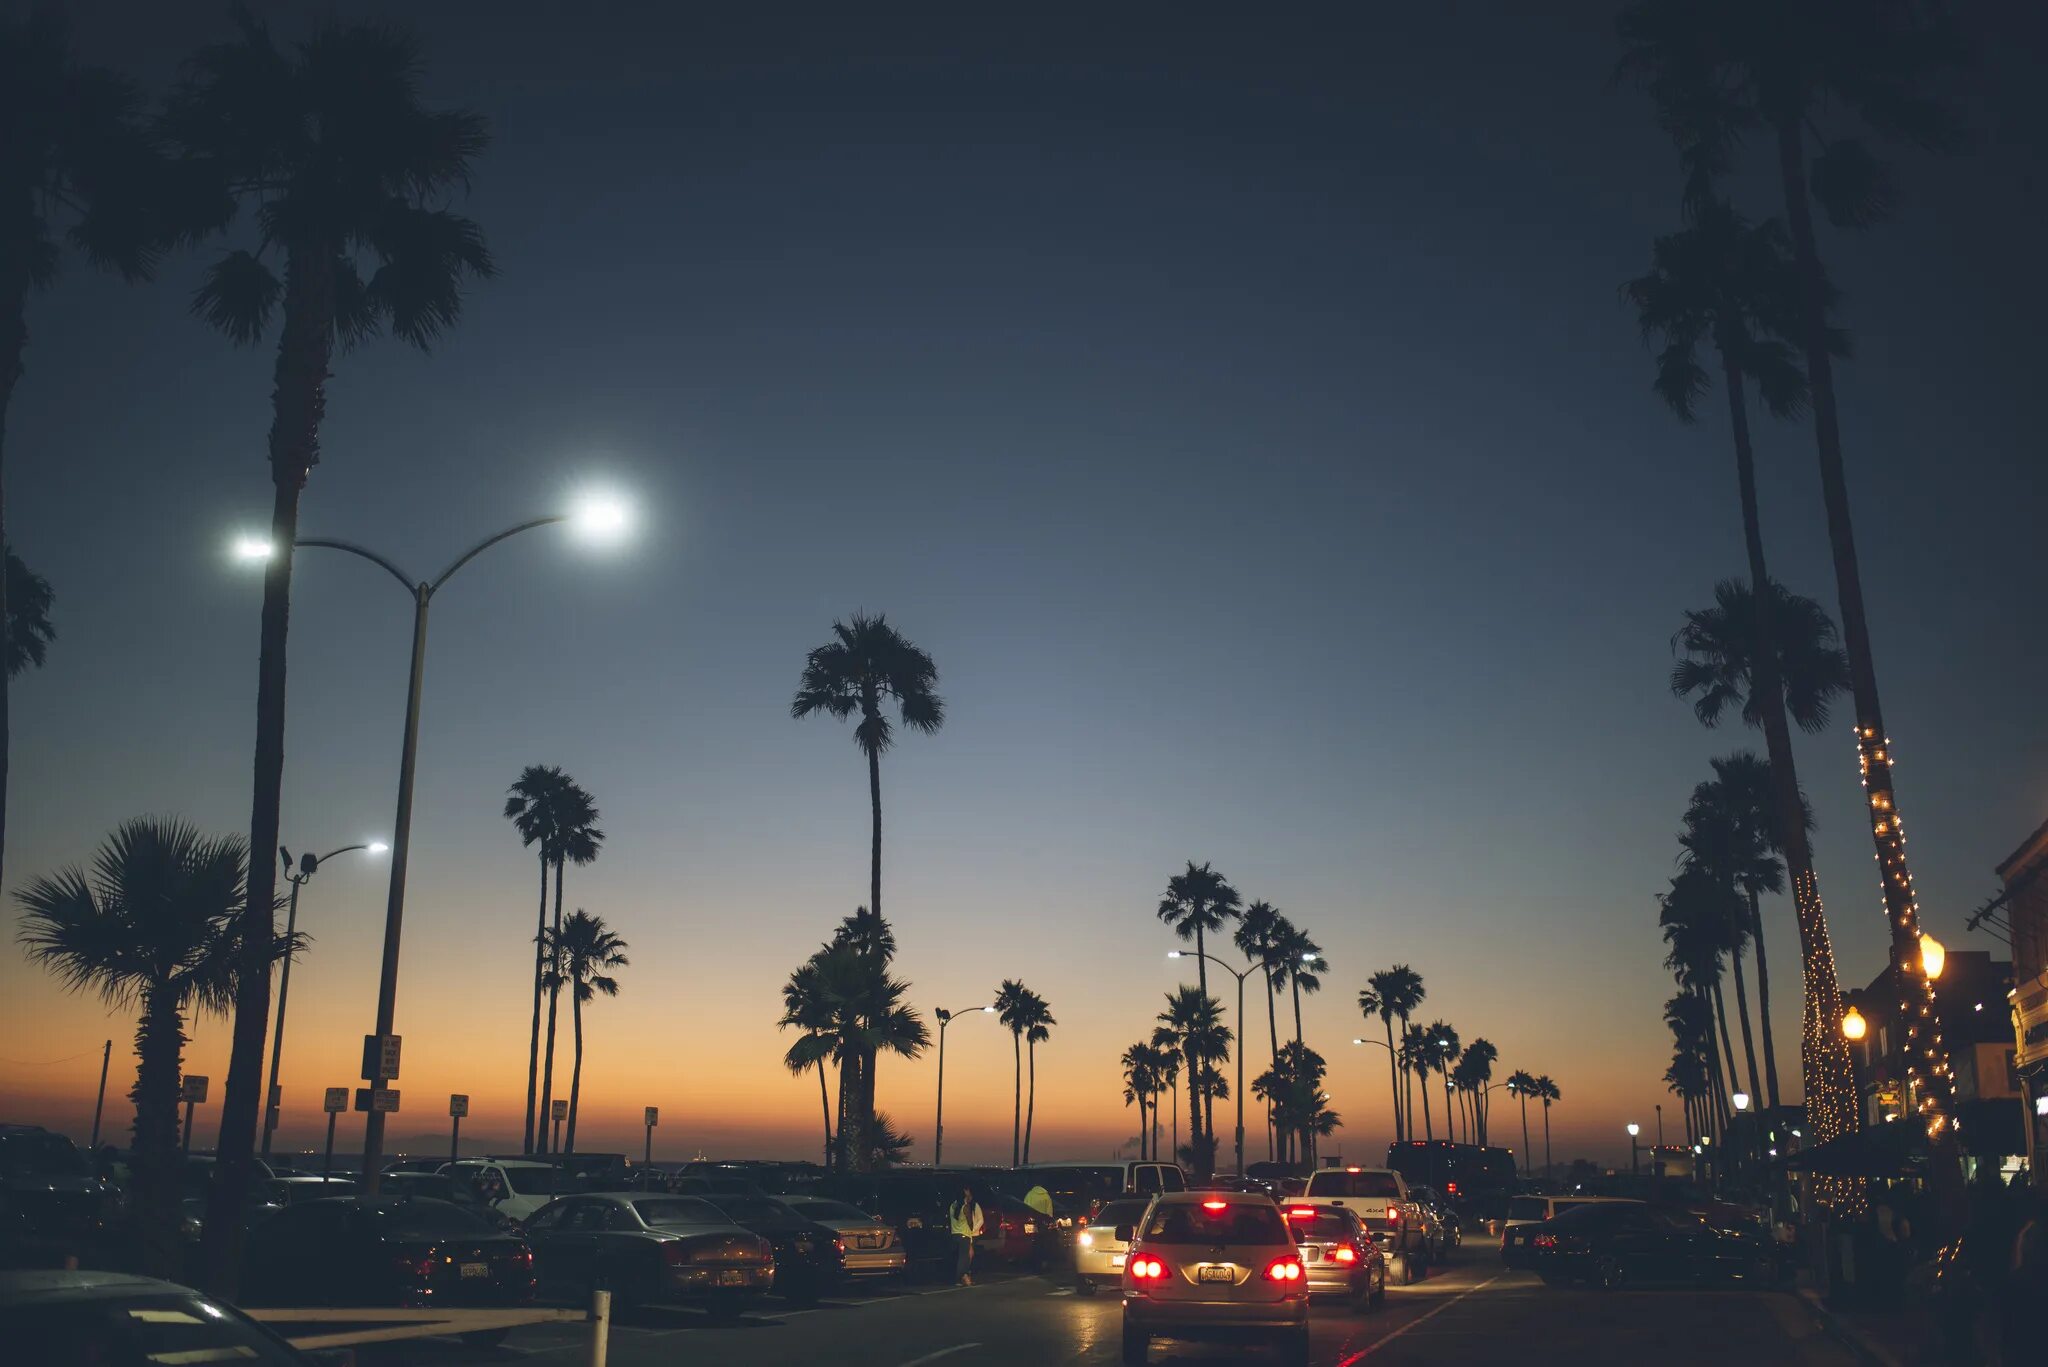 Обои на телефон эстетика лето. Лос Анджелес Калифорния пальмы. Сансет роад Лос Анджелес. Дорога Майами Лос Анджелес. Лос Анджелес 80е.